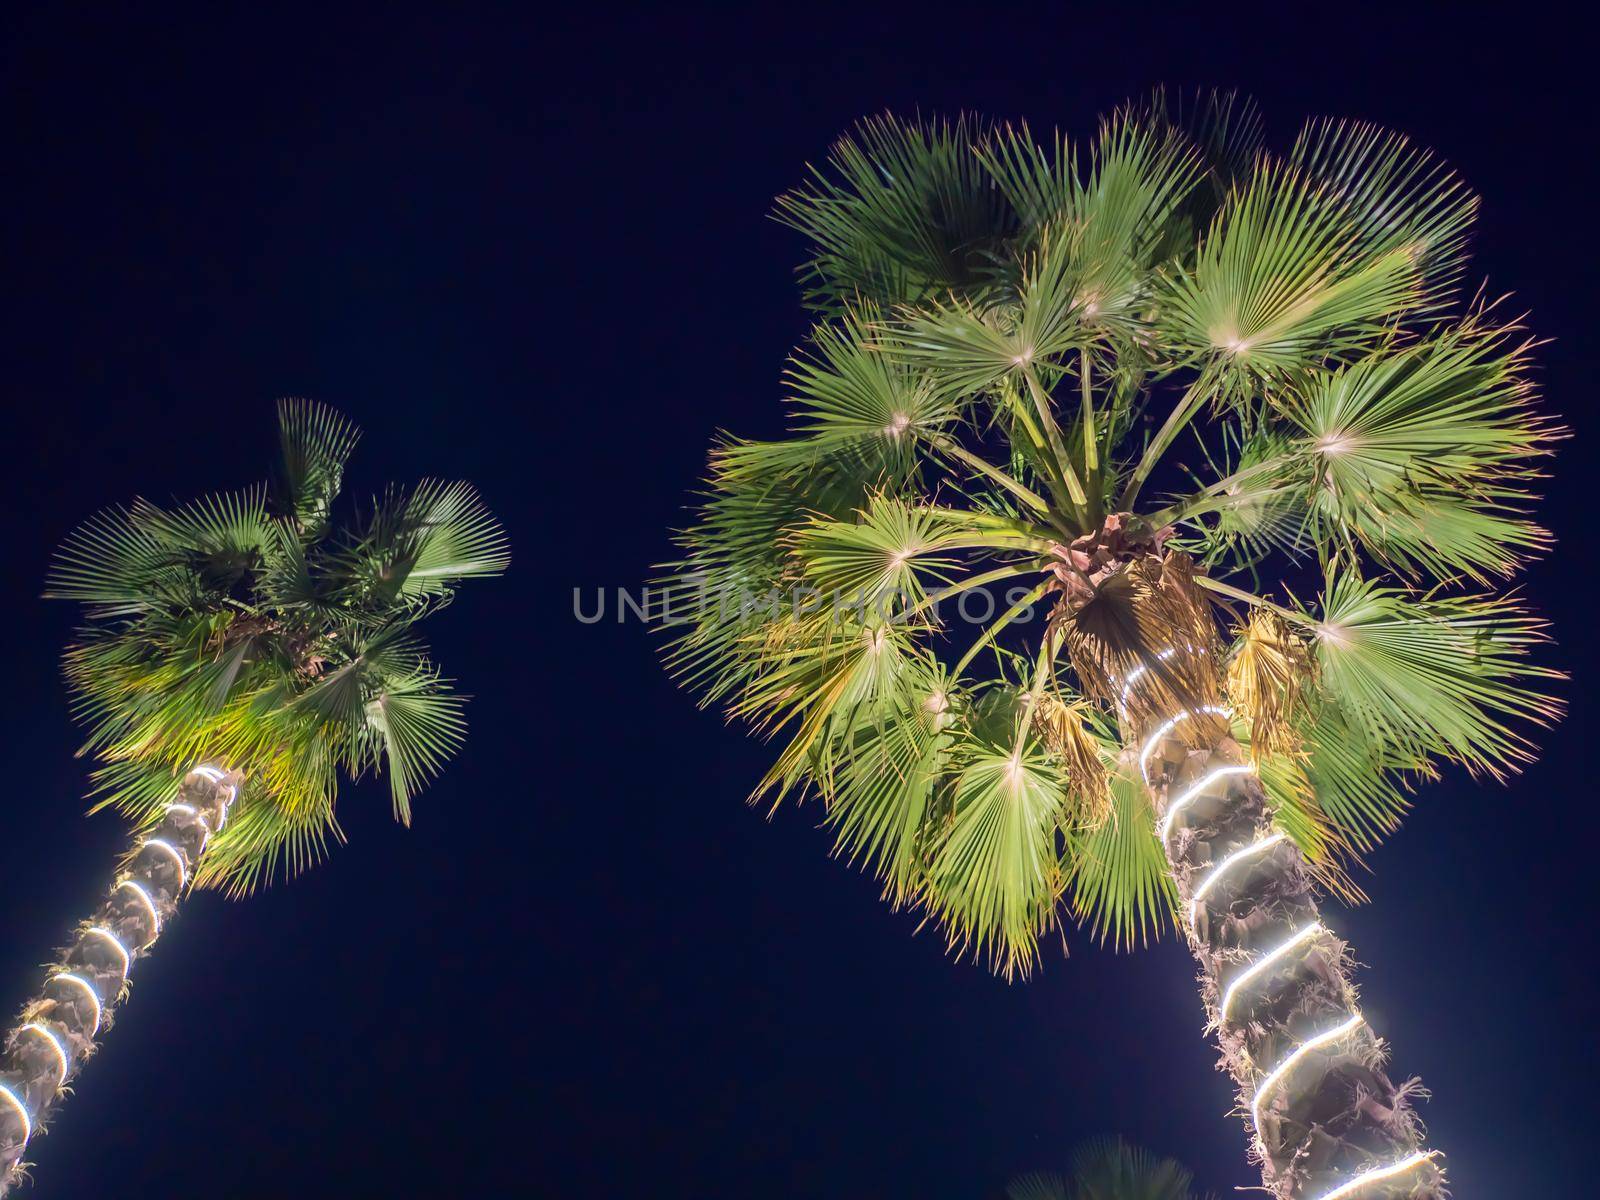 Christmas garlands and light illumination on a two palms tree at night. Dubai